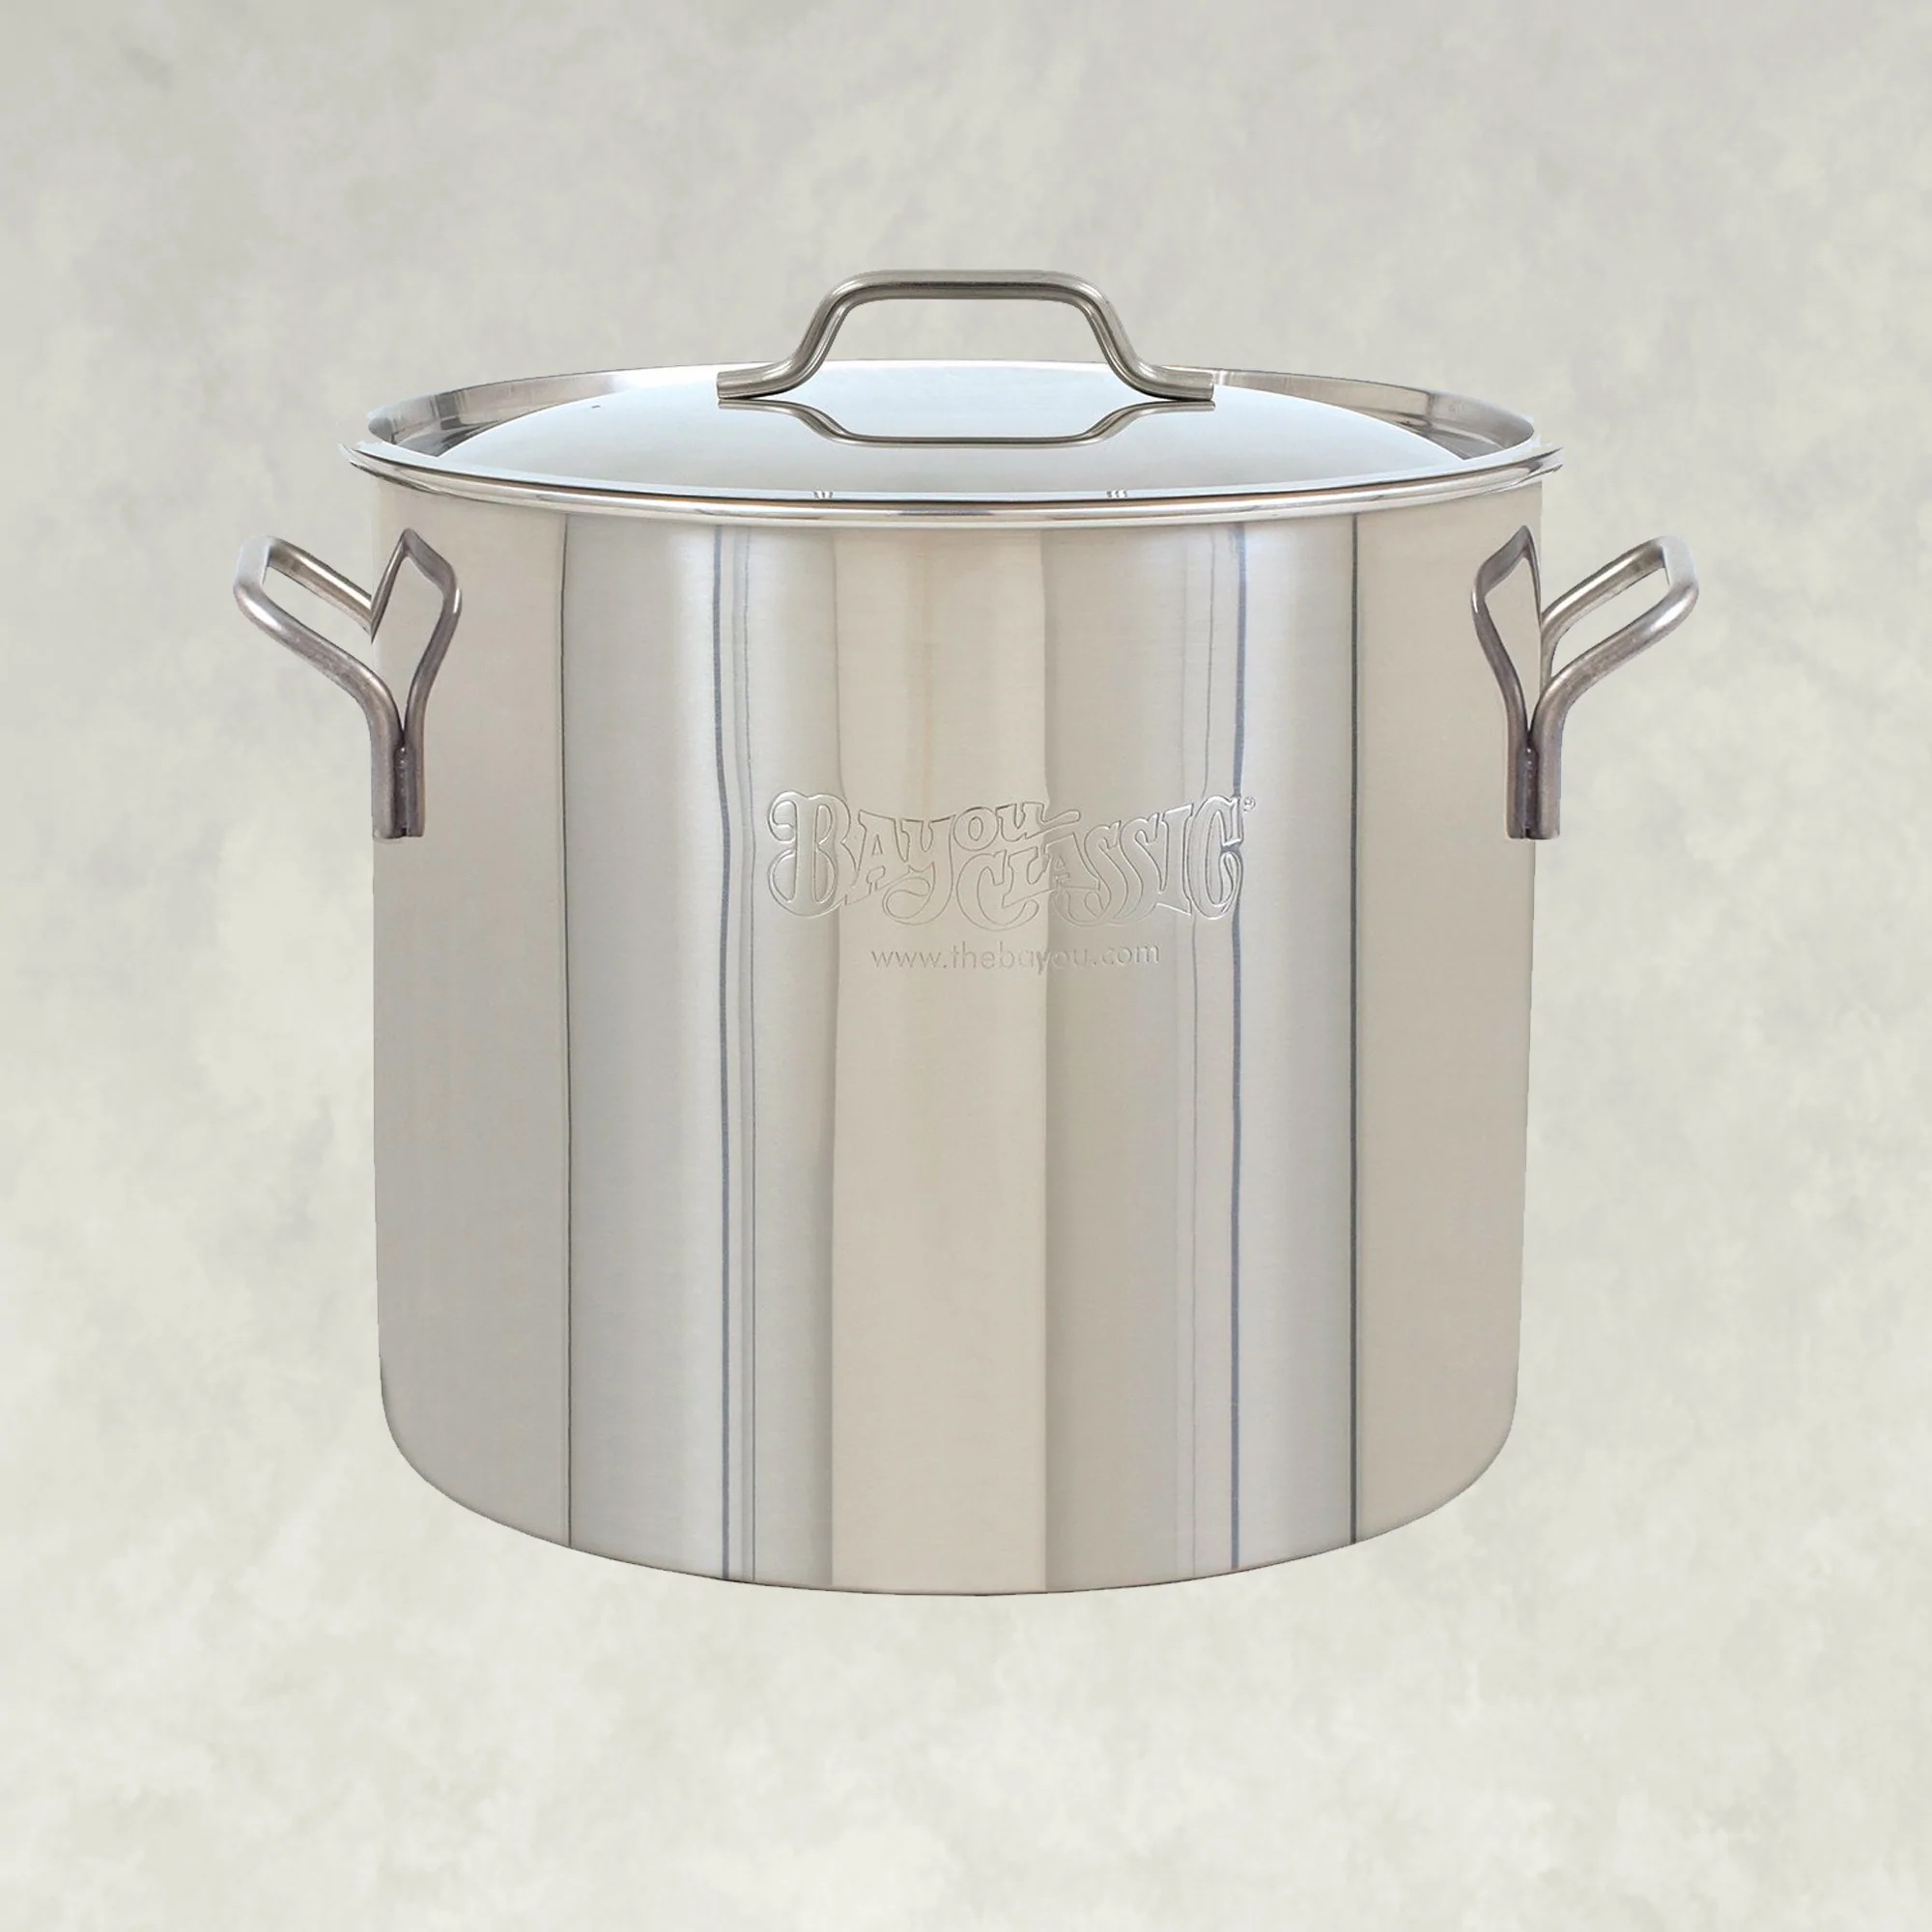 Bayou Classic 2.5 Quart Cast Iron Covered Bean Pot